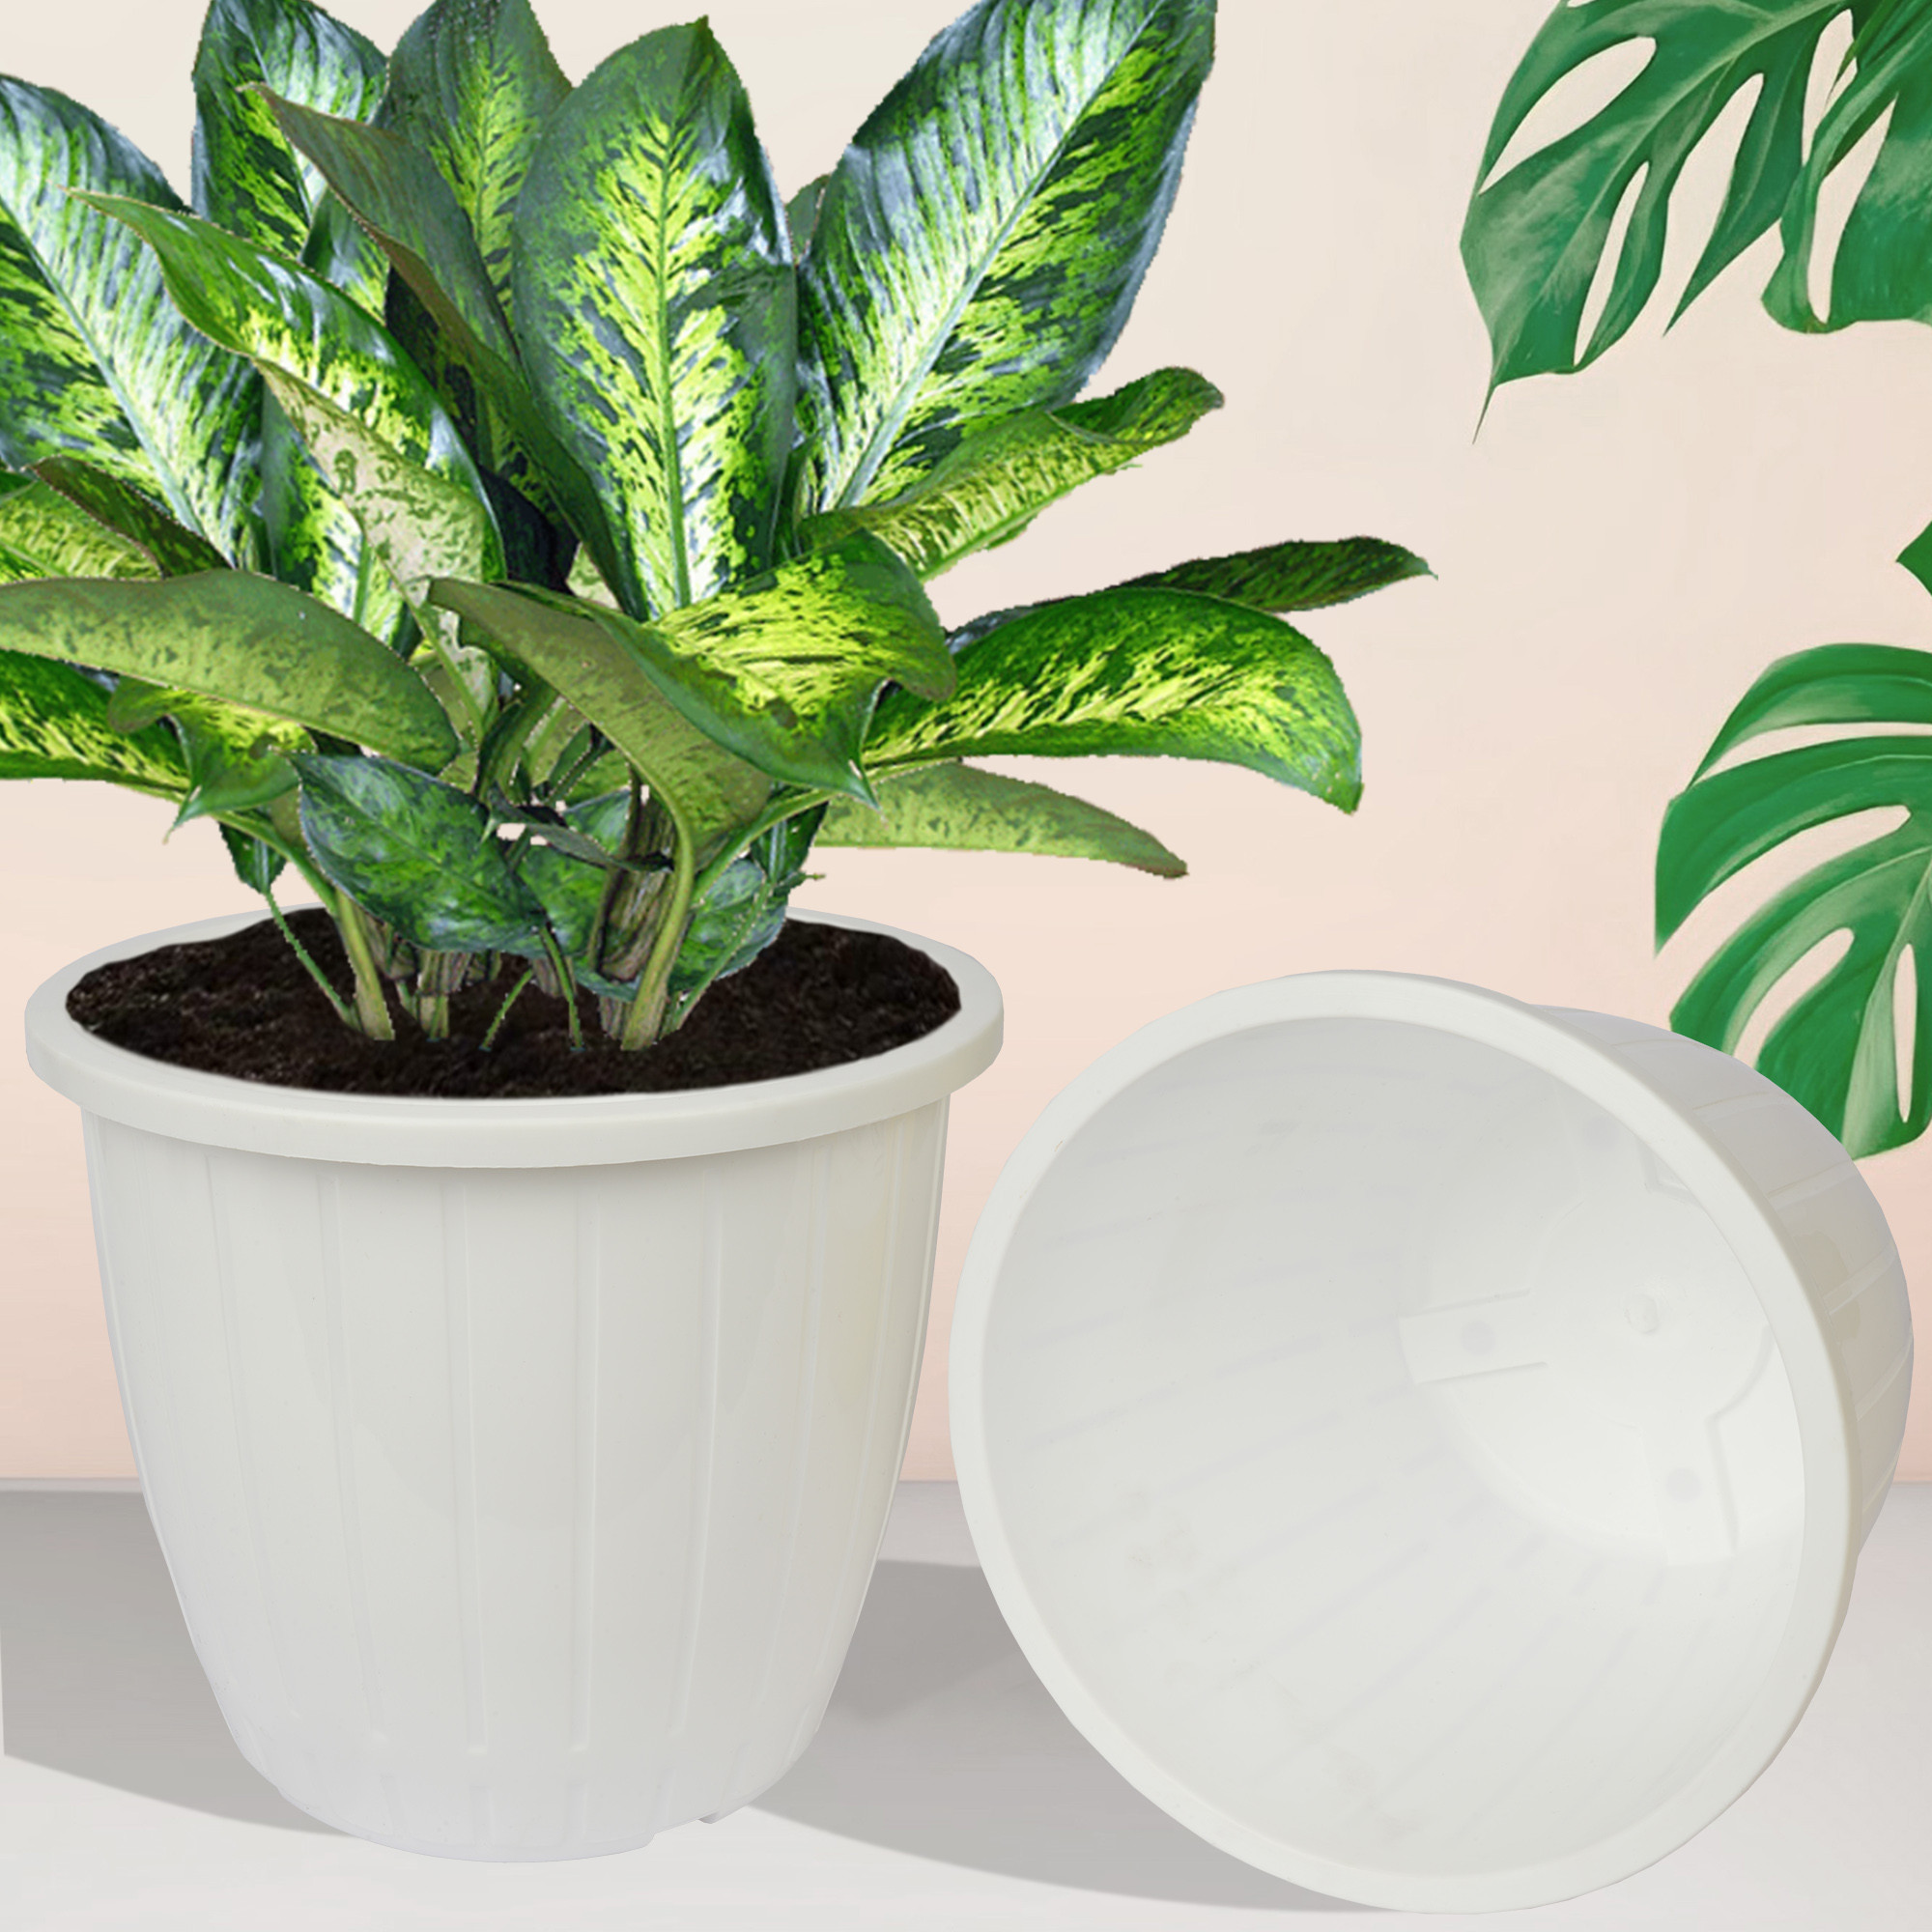 Kuber Industries Flower Pot | Flower Pots for Indoor & Outdoor | Plastic Pot for Gardening | Planter for Flower | Balcony Pots for Home Decor | Duro Flower Pot | 8 Inch | Pack of 2 | Multi